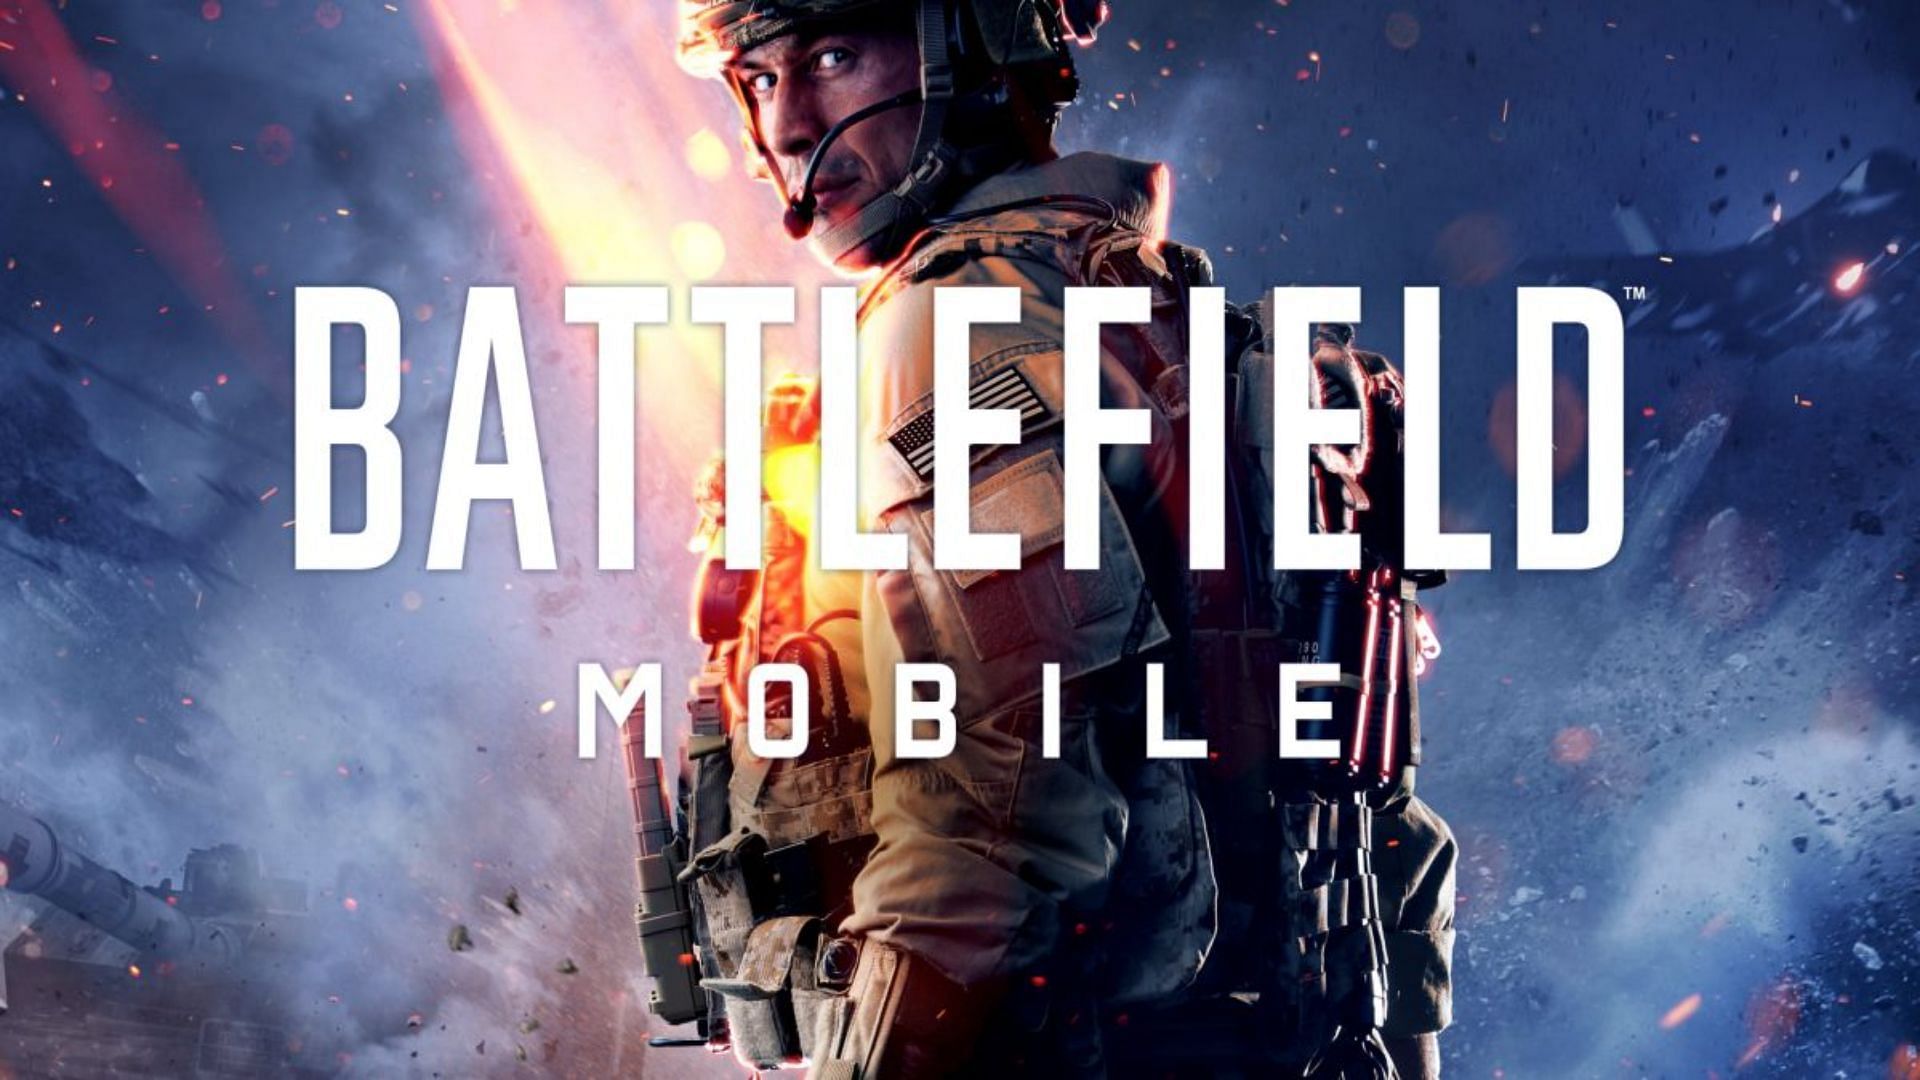 Battlefield Mobile promo poster (Image via EA Games)